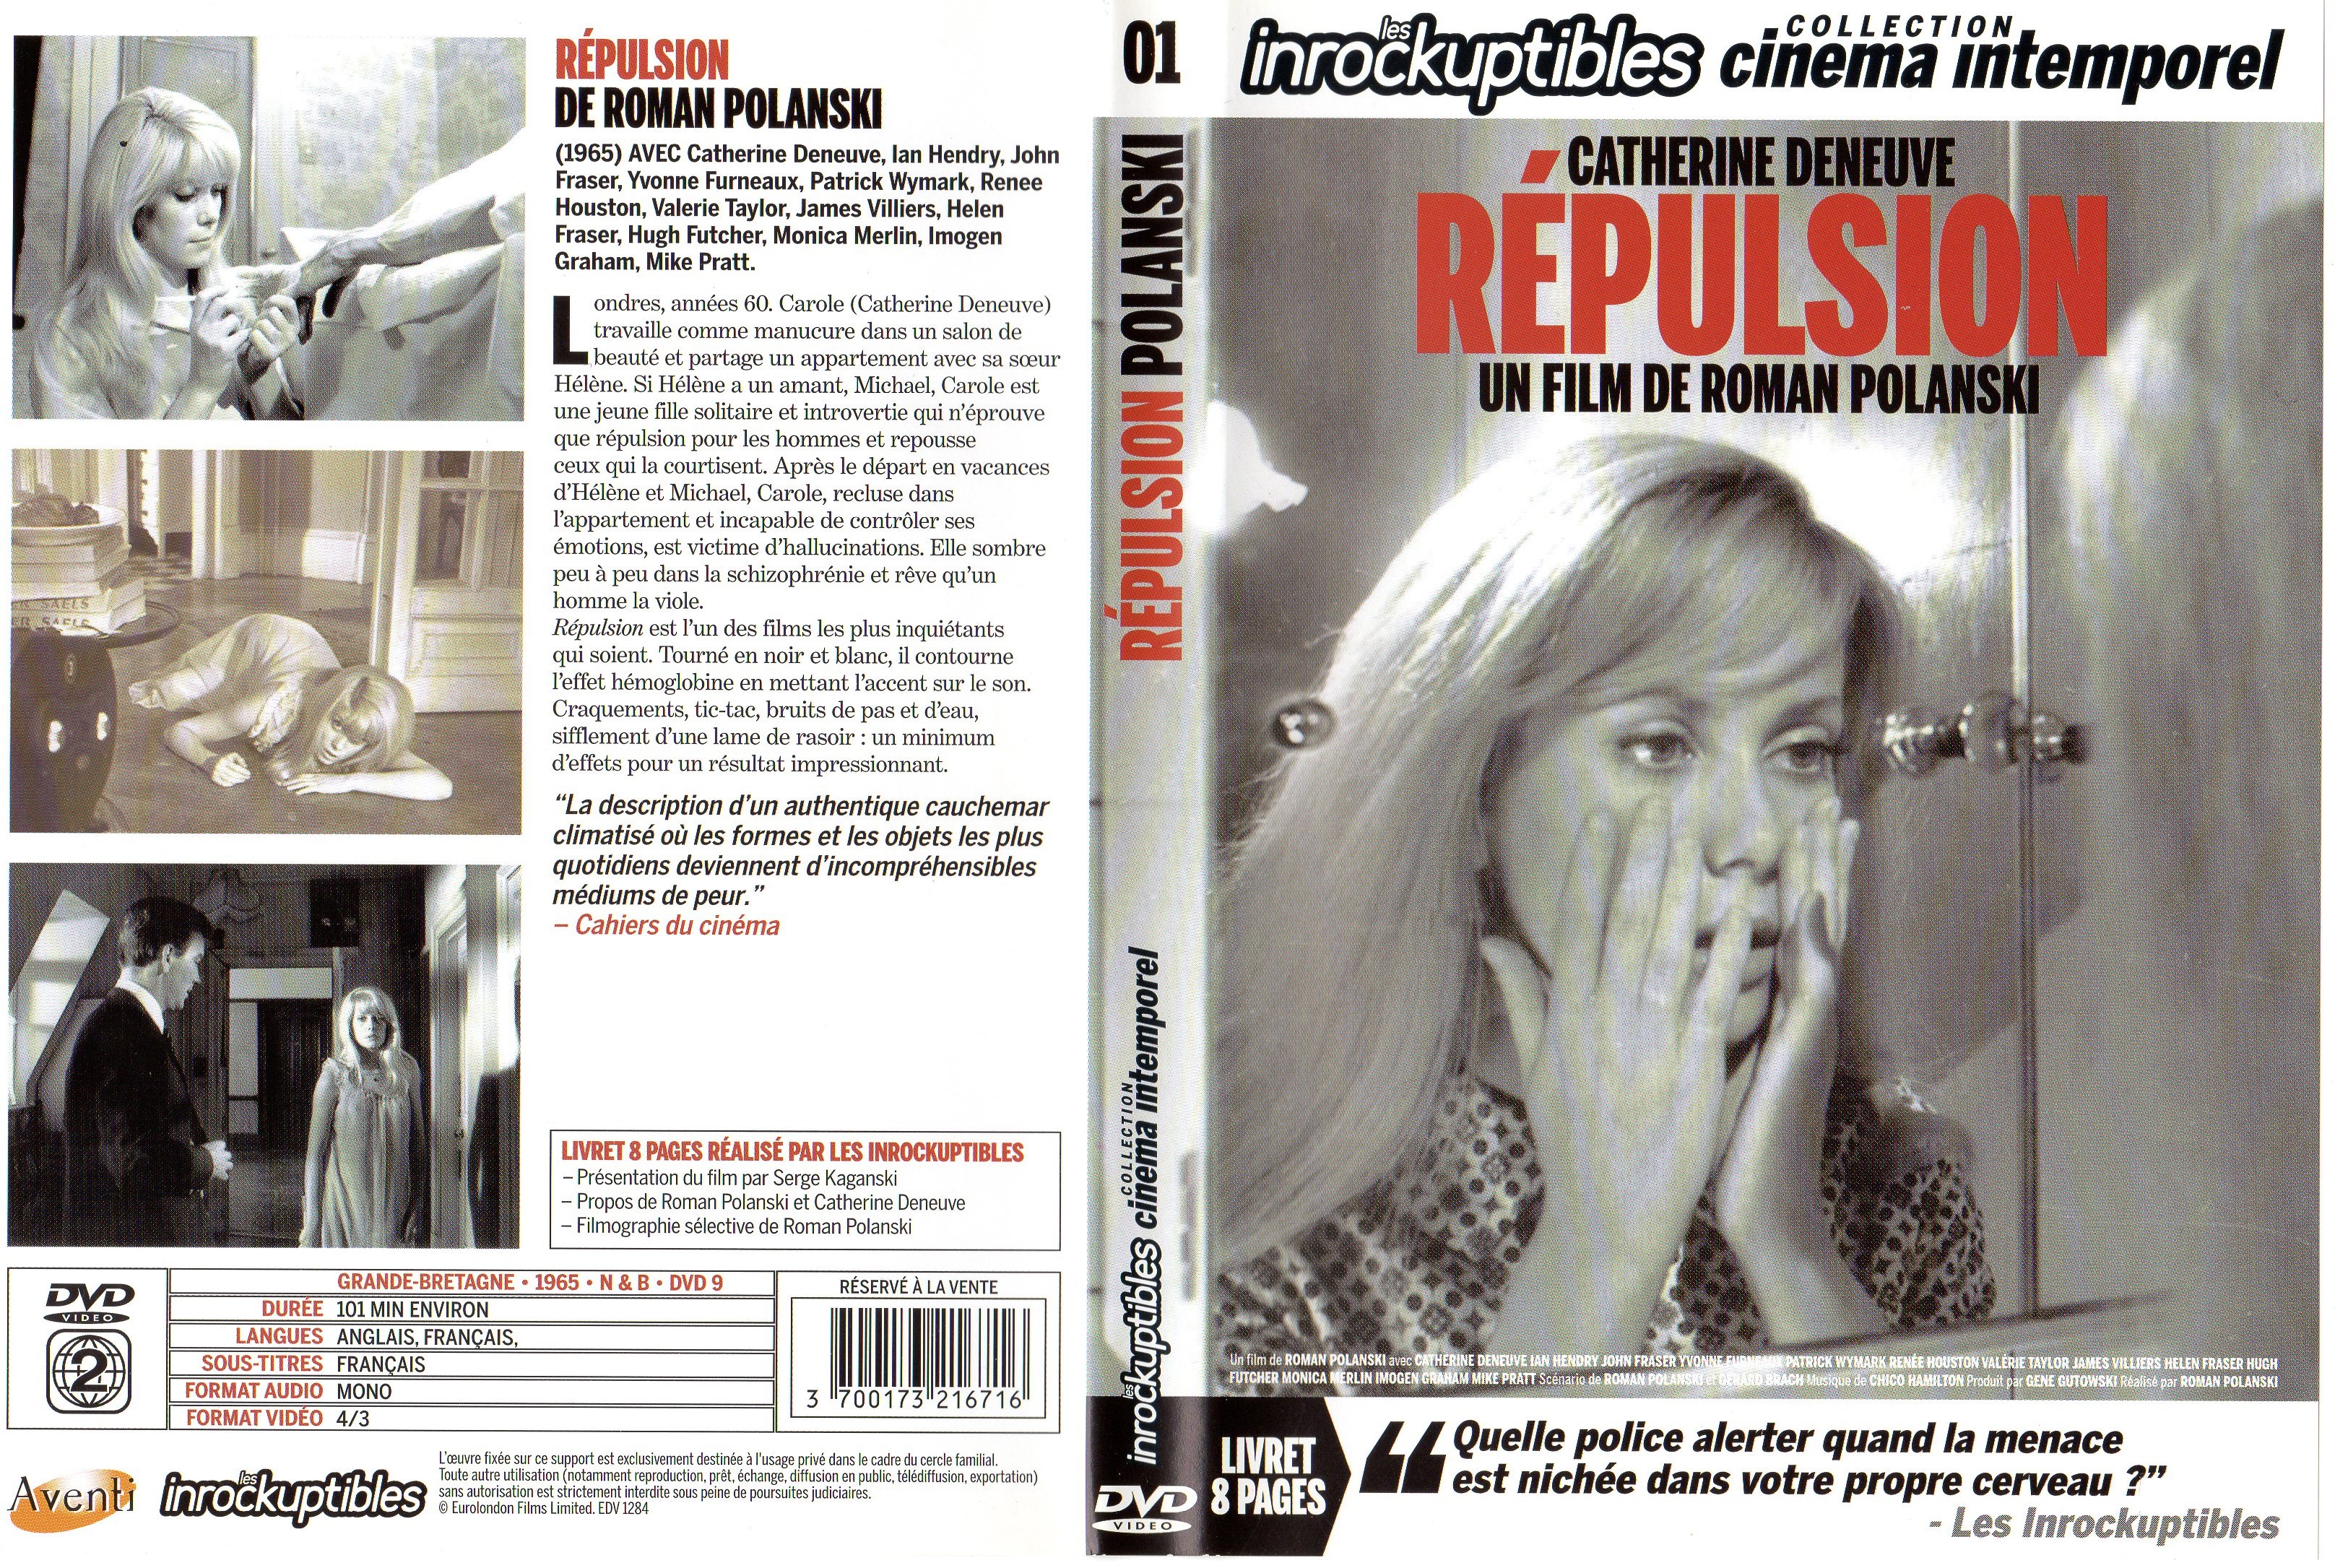 Jaquette DVD Repulsion v3